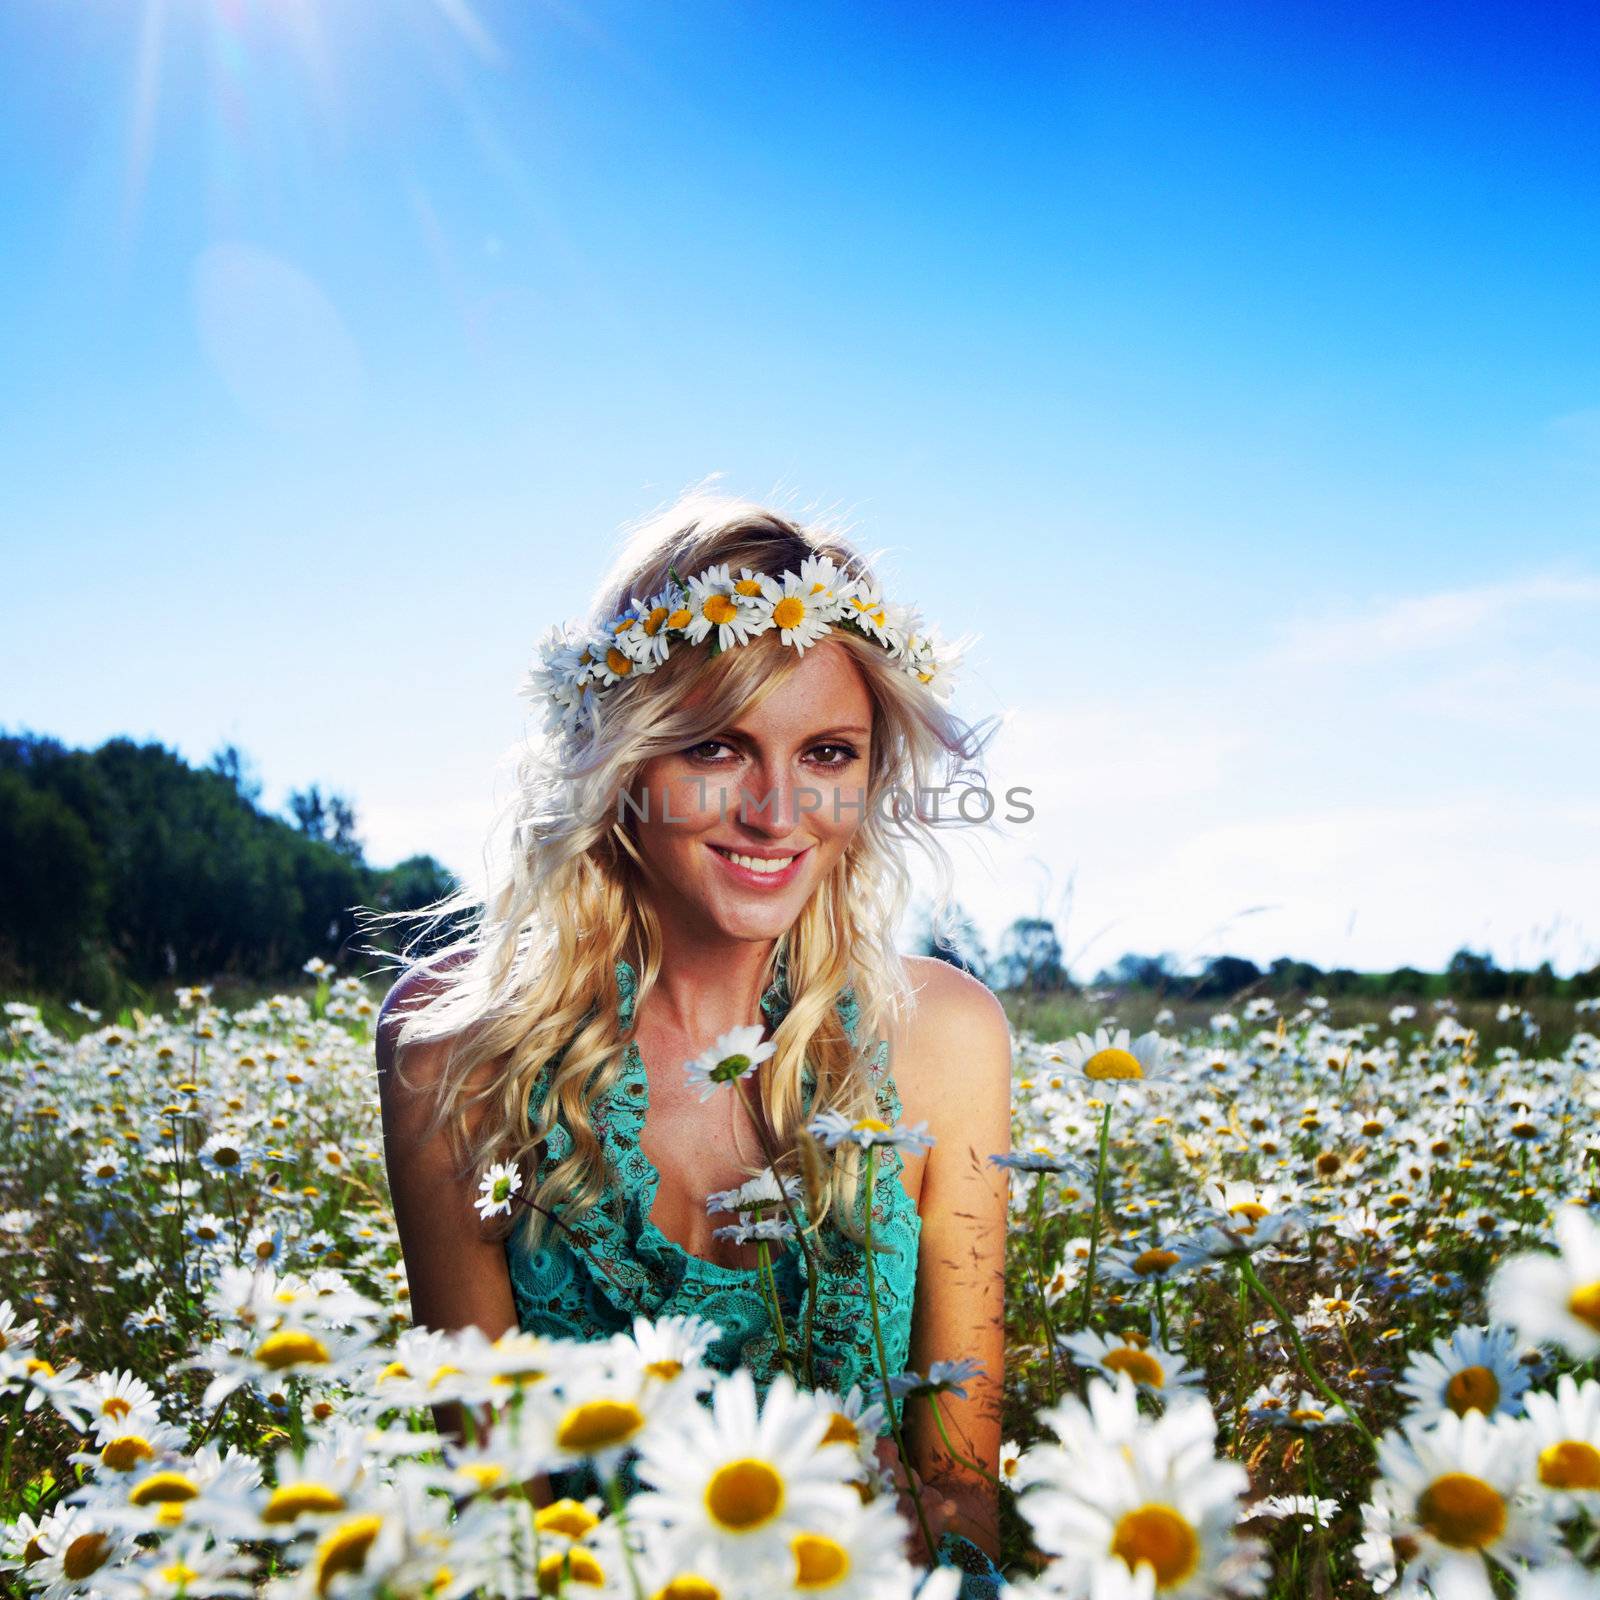  beautiful girl  in dress on the sunny daisy flowers field 